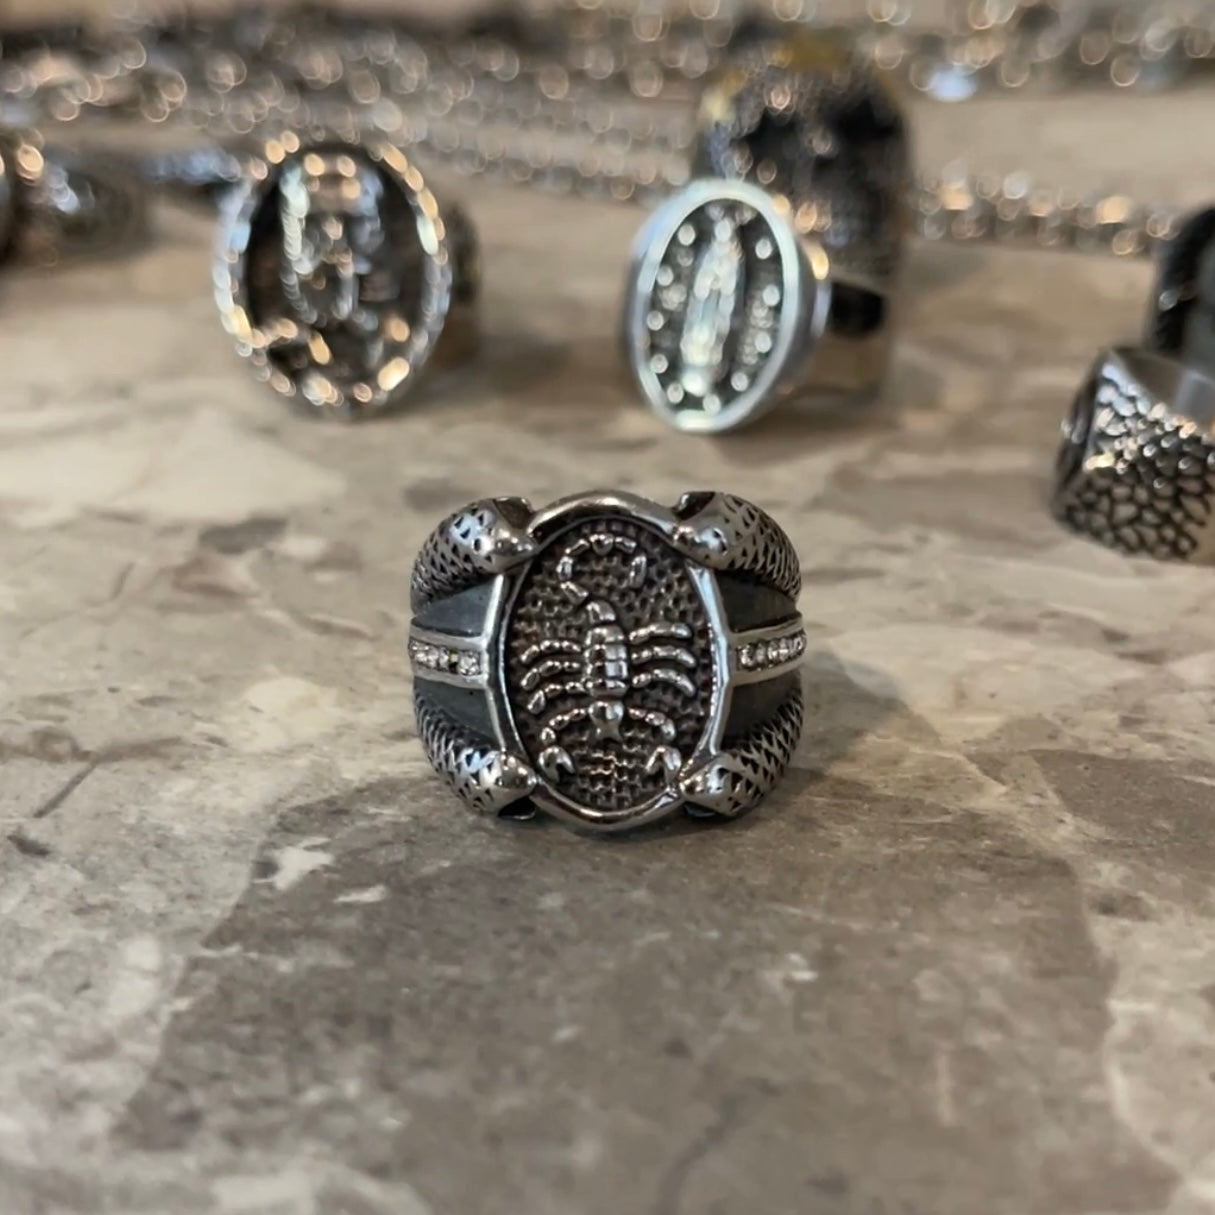 The Scorpion Vintage Ring